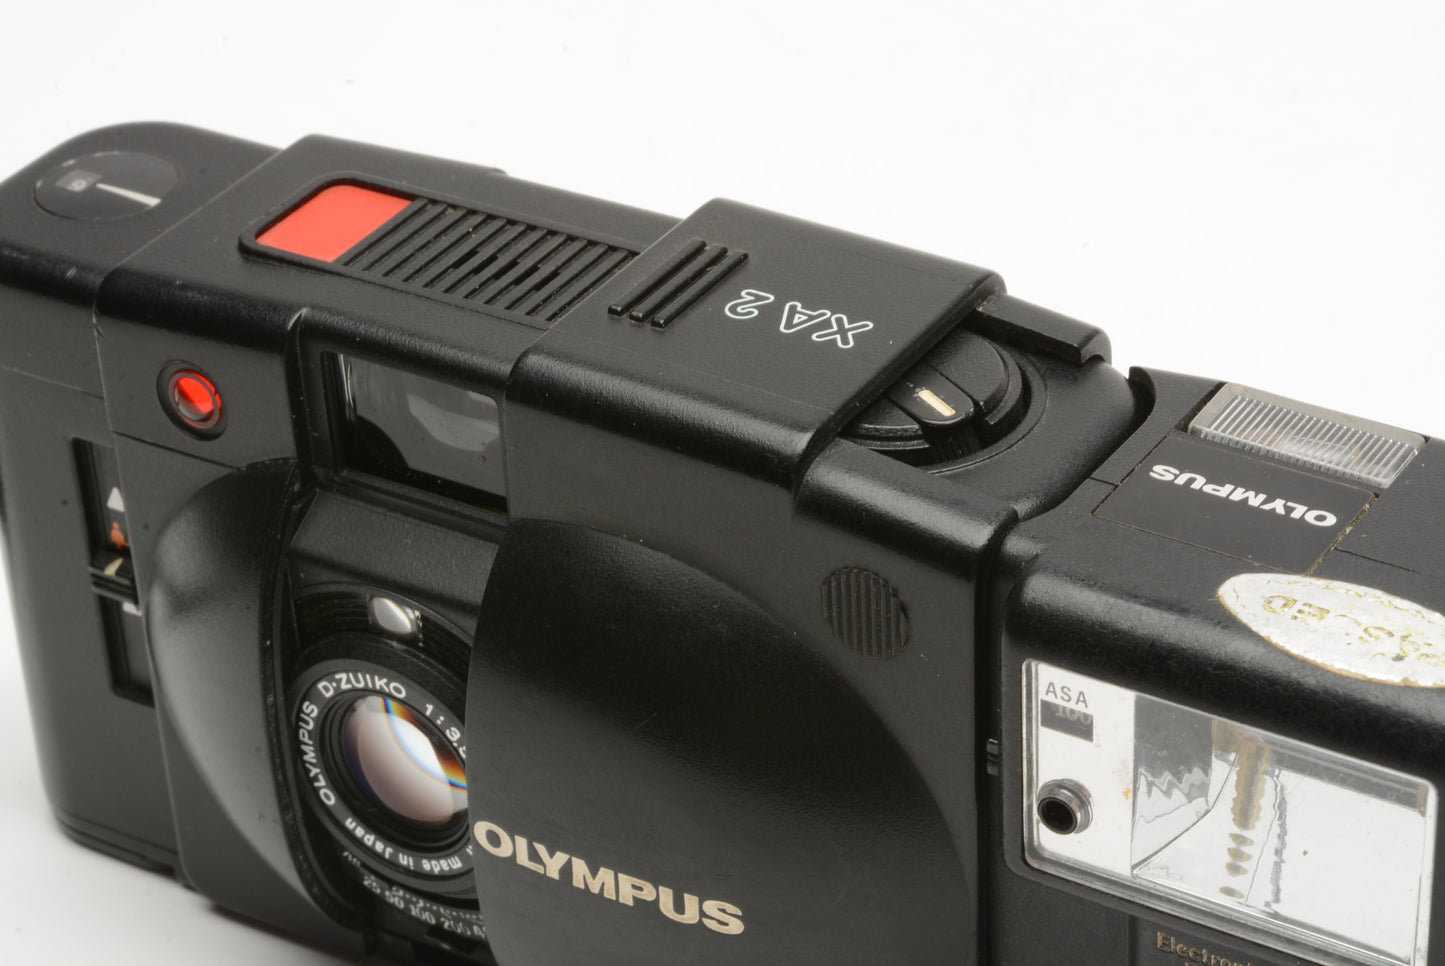 Olympus XA 2 w/A11 flash, new light seals, tested, great!